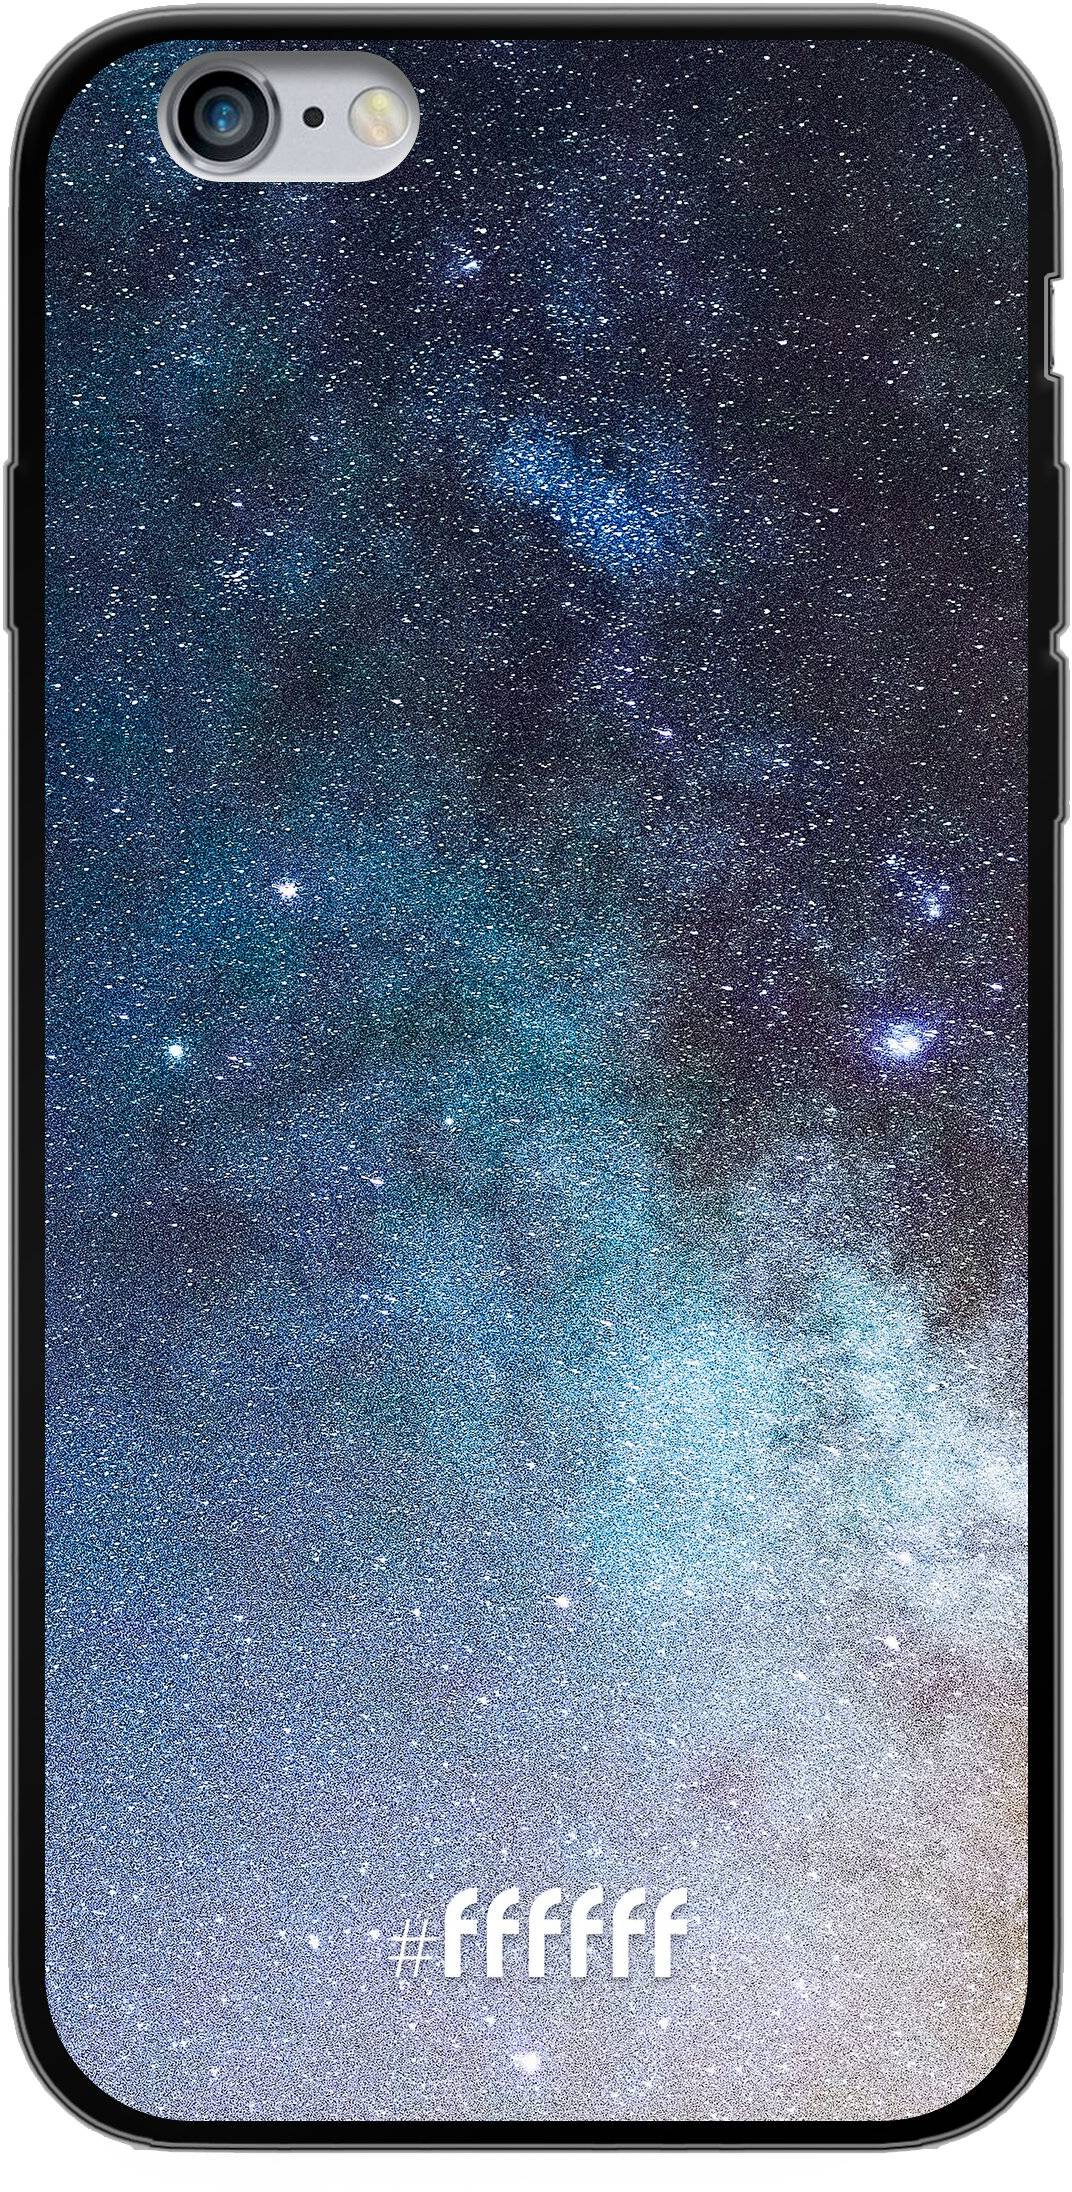 Milky Way iPhone 6